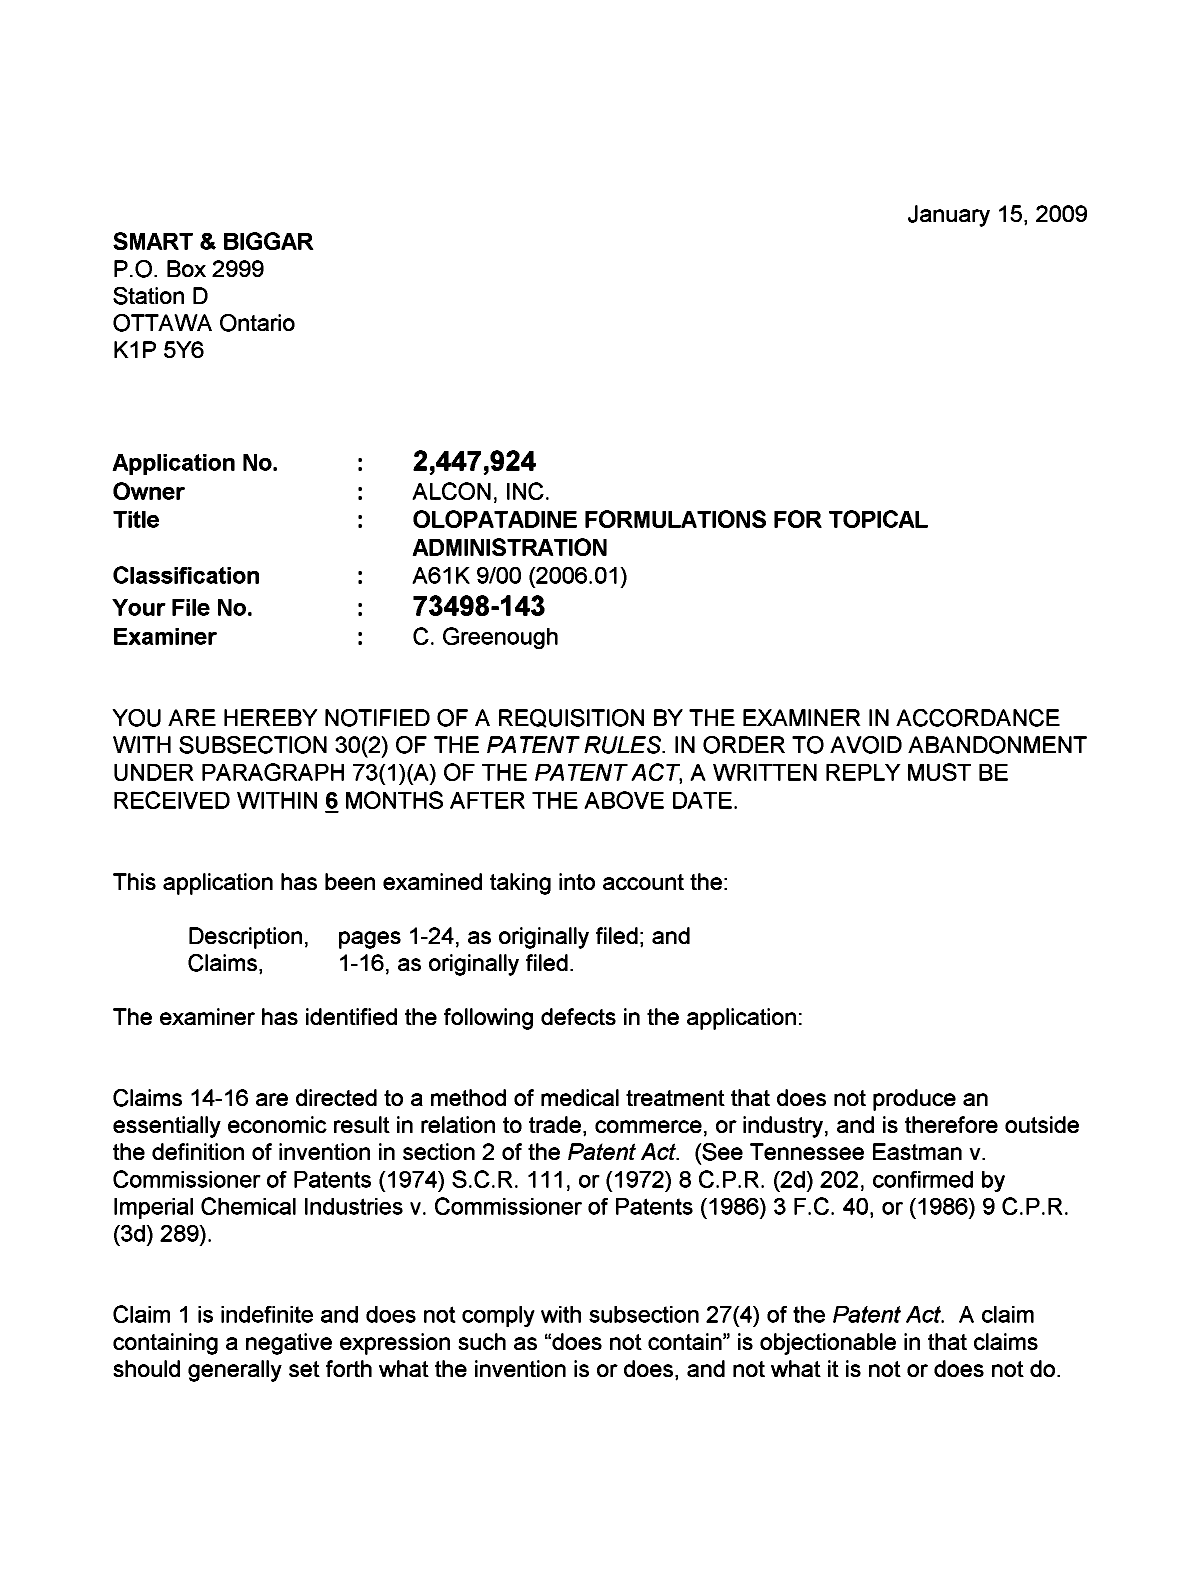 Canadian Patent Document 2447924. Prosecution-Amendment 20081215. Image 1 of 2